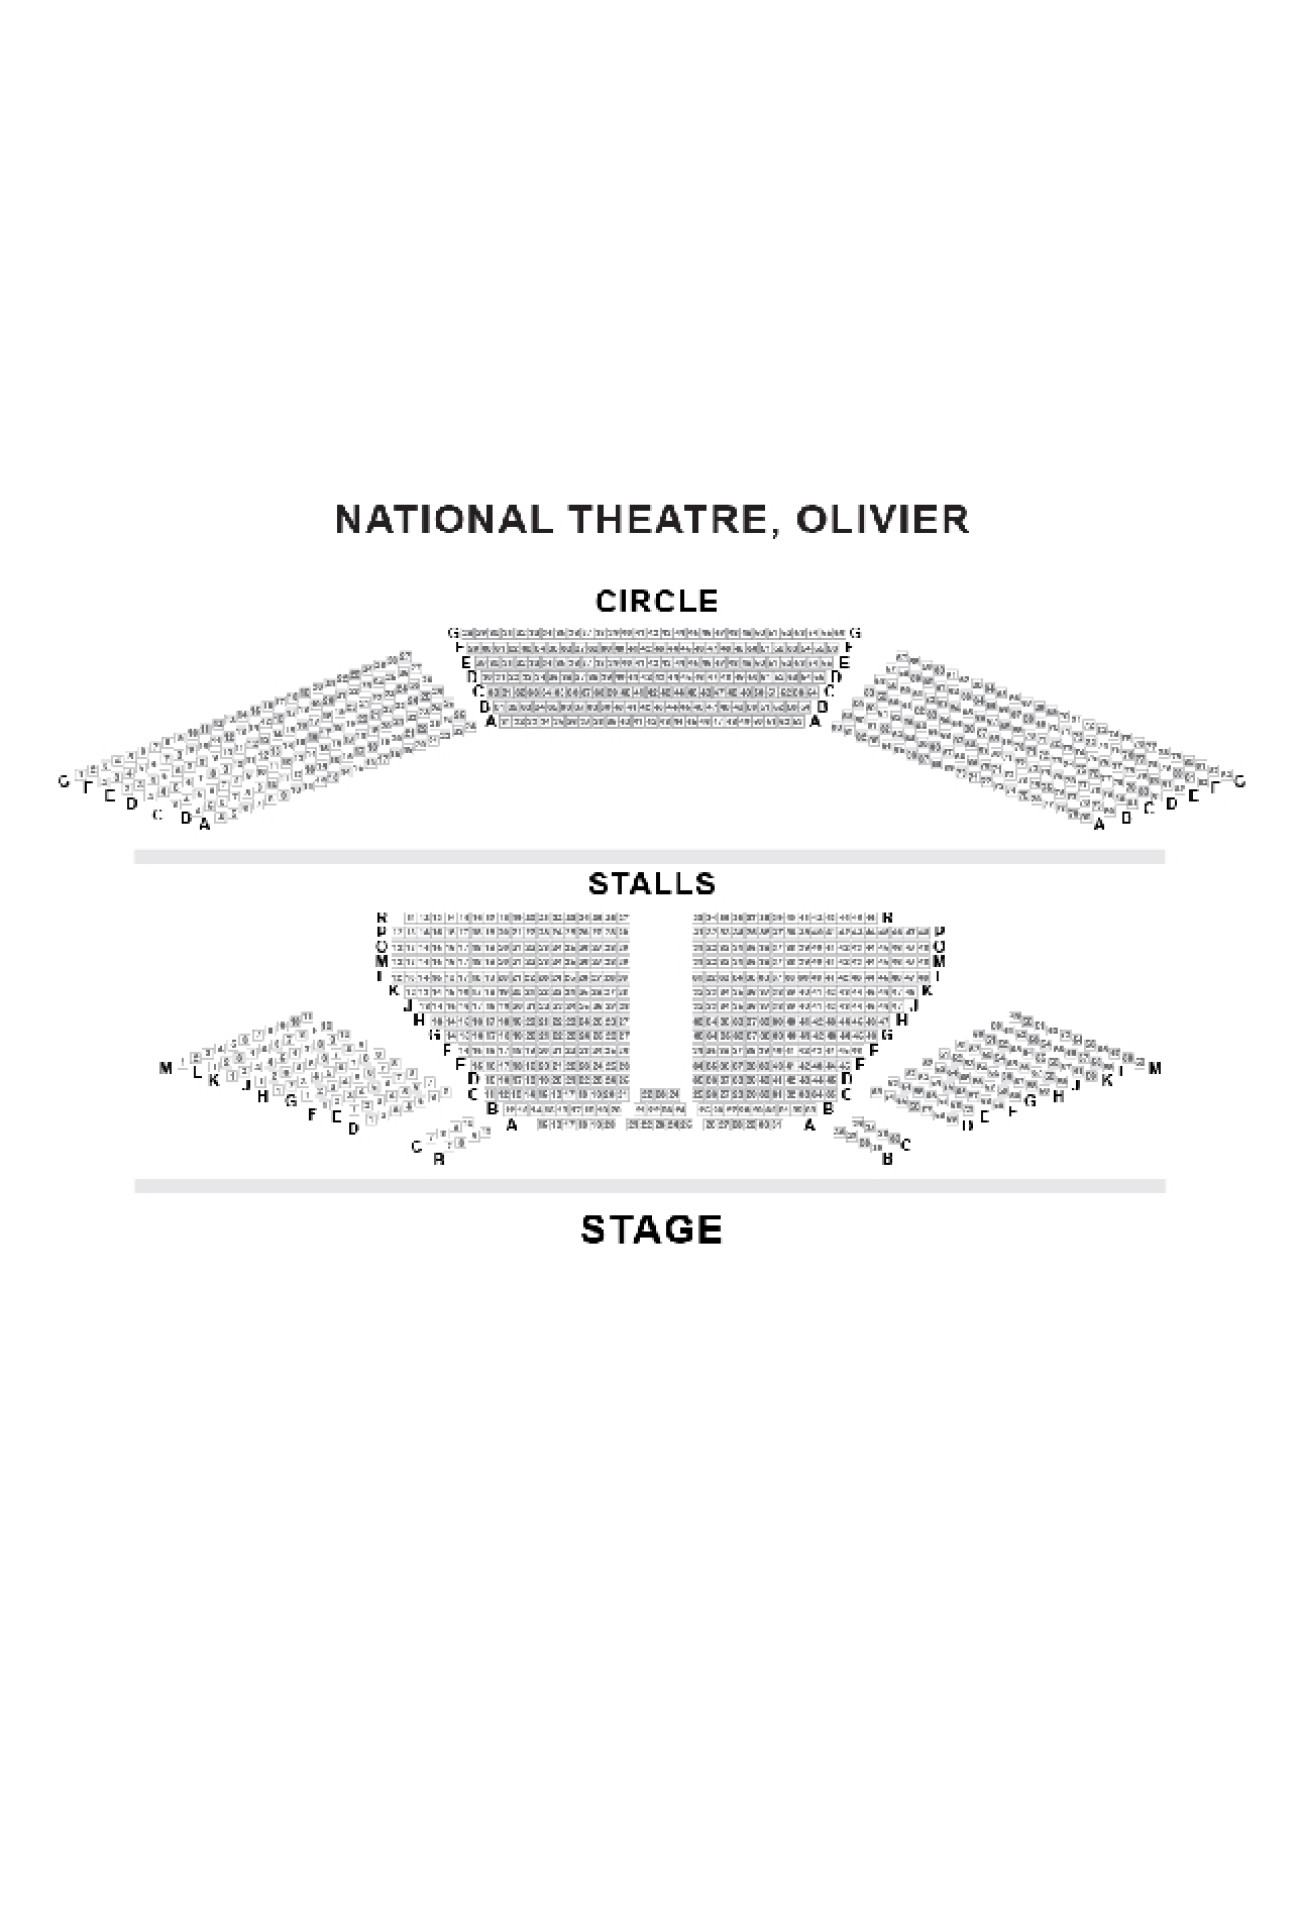 Olivier Theatre (National Theatre) seteplan